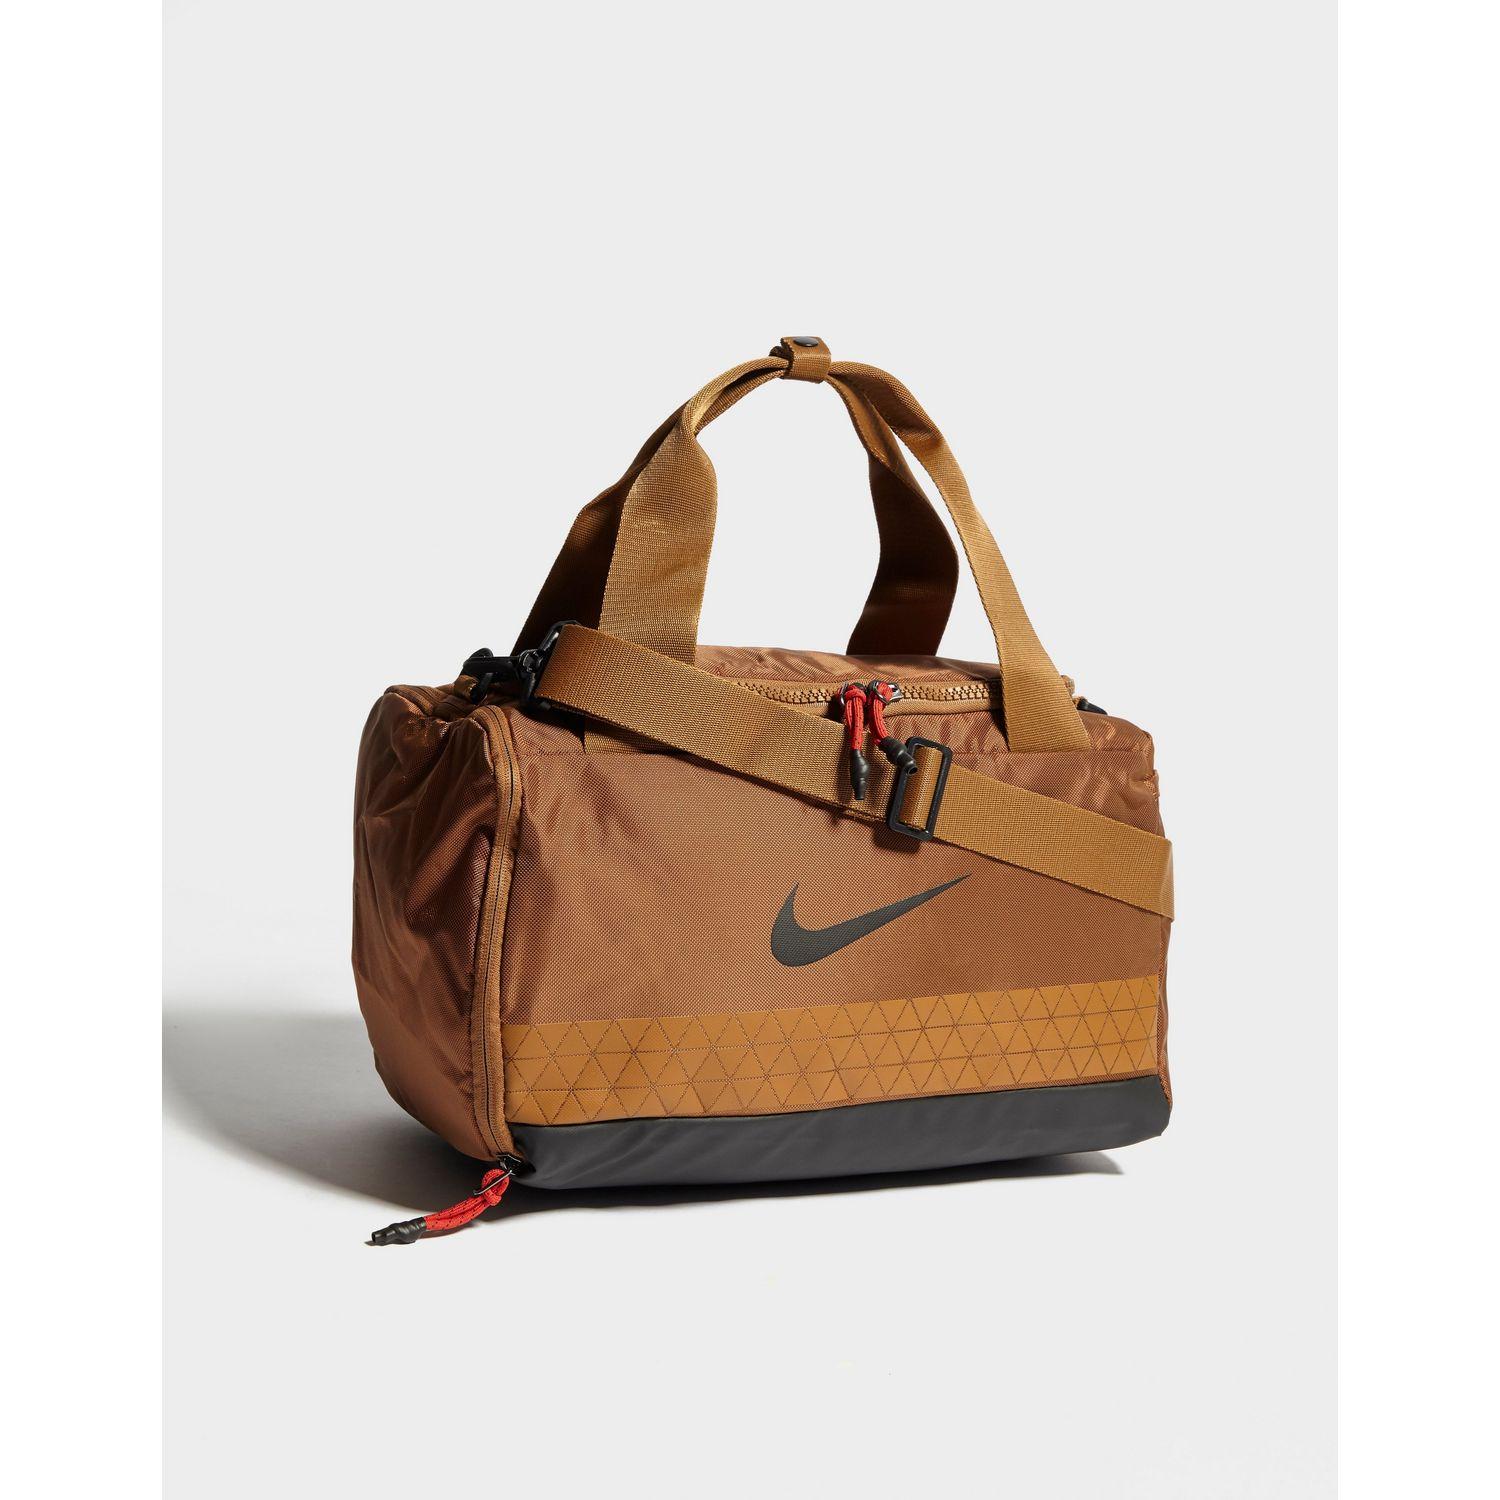 Nike Synthetic Vapor Duffel Bag in Brown/Black (Brown) for Men - Lyst